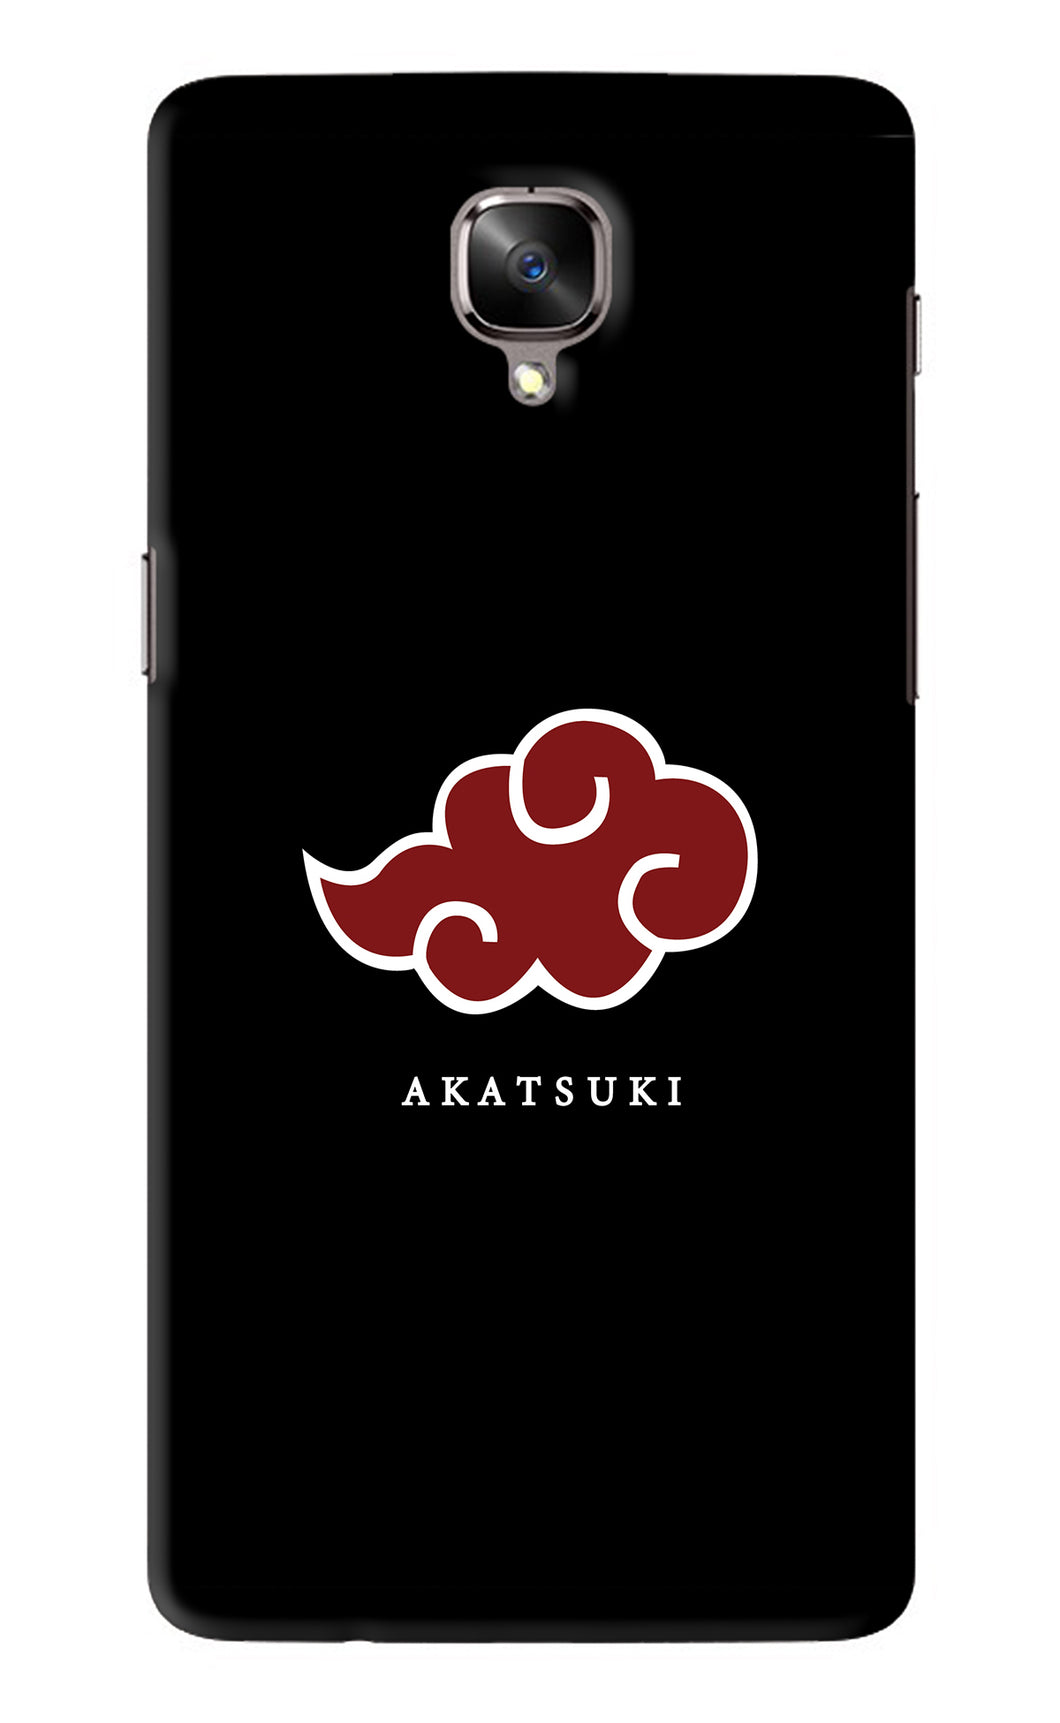 Akatsuki 1 OnePlus 3 Back Skin Wrap